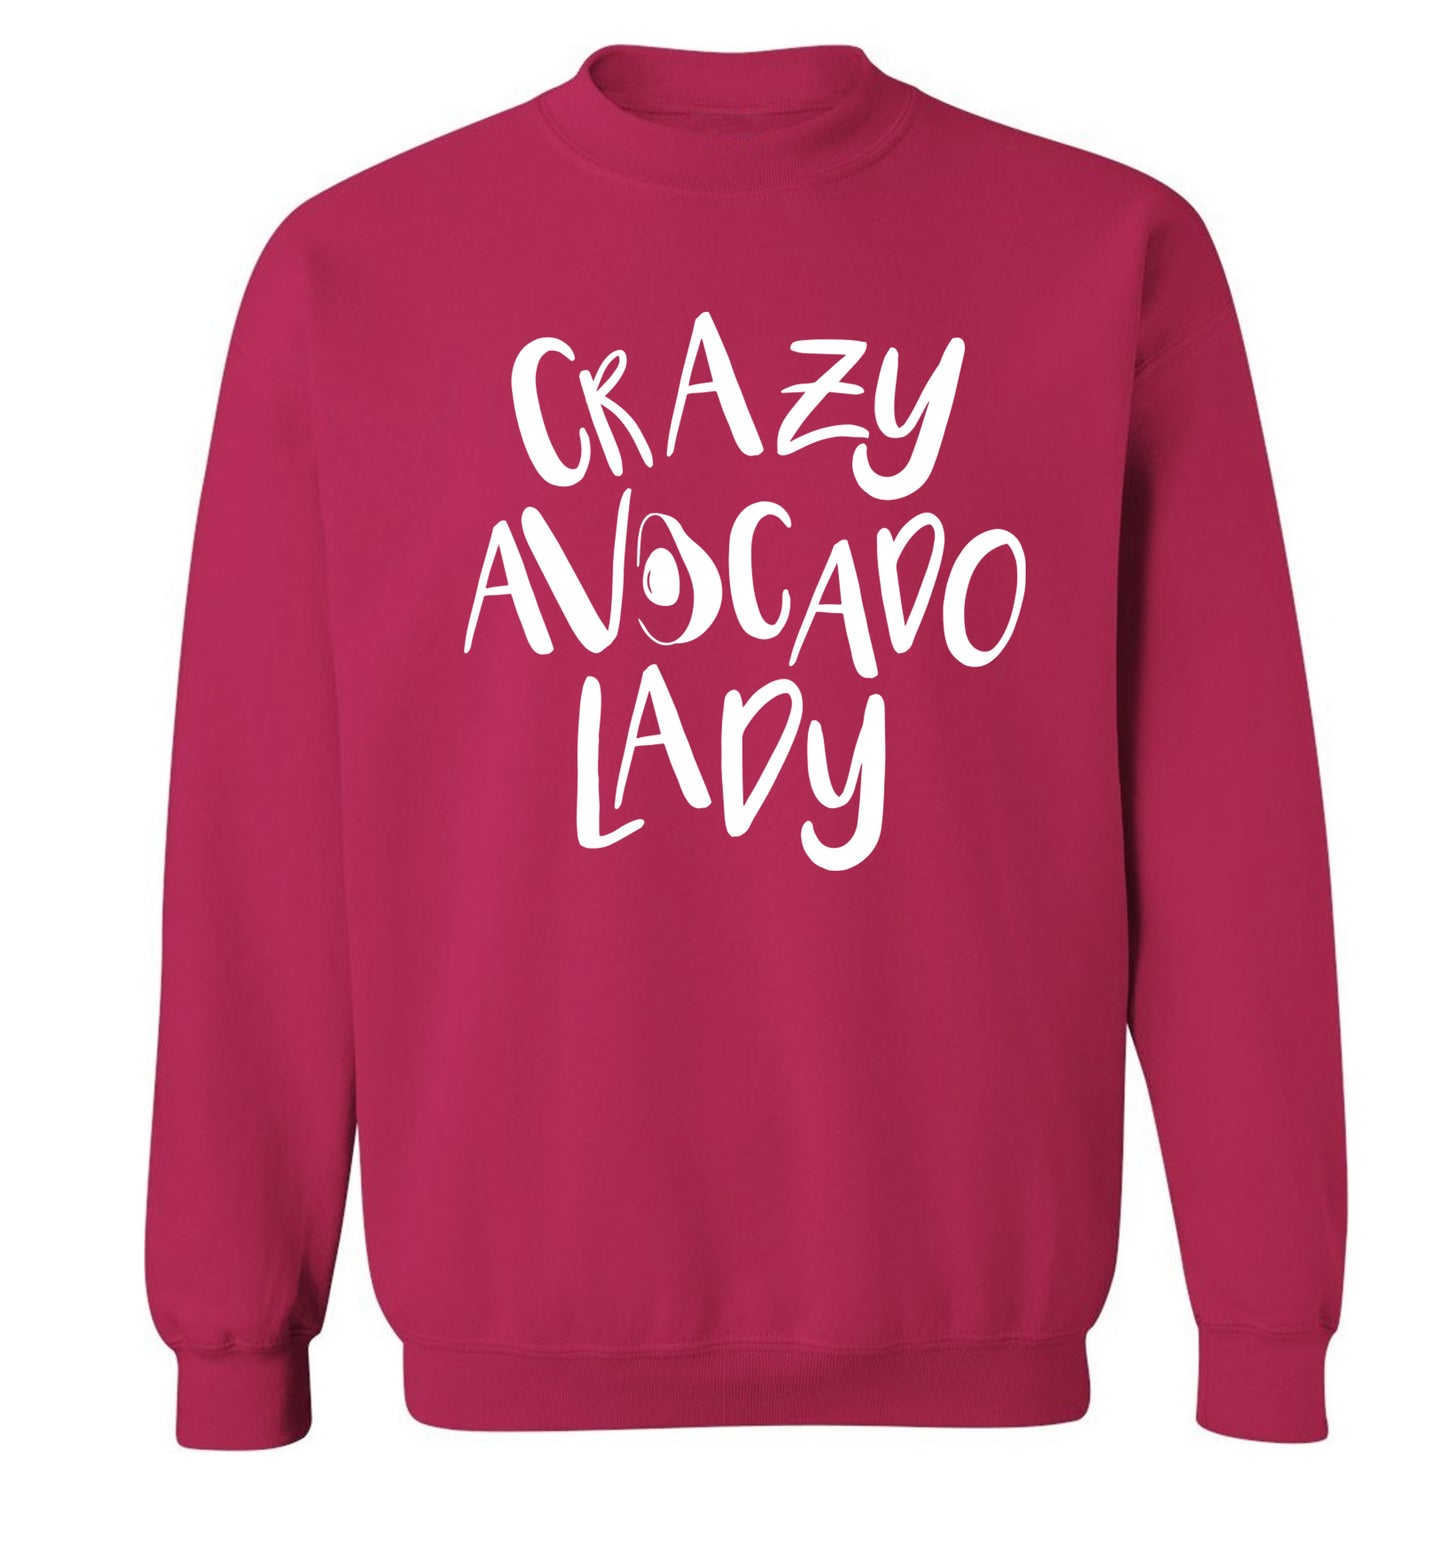 Crazy avocado lady Adult's unisex pink Sweater 2XL